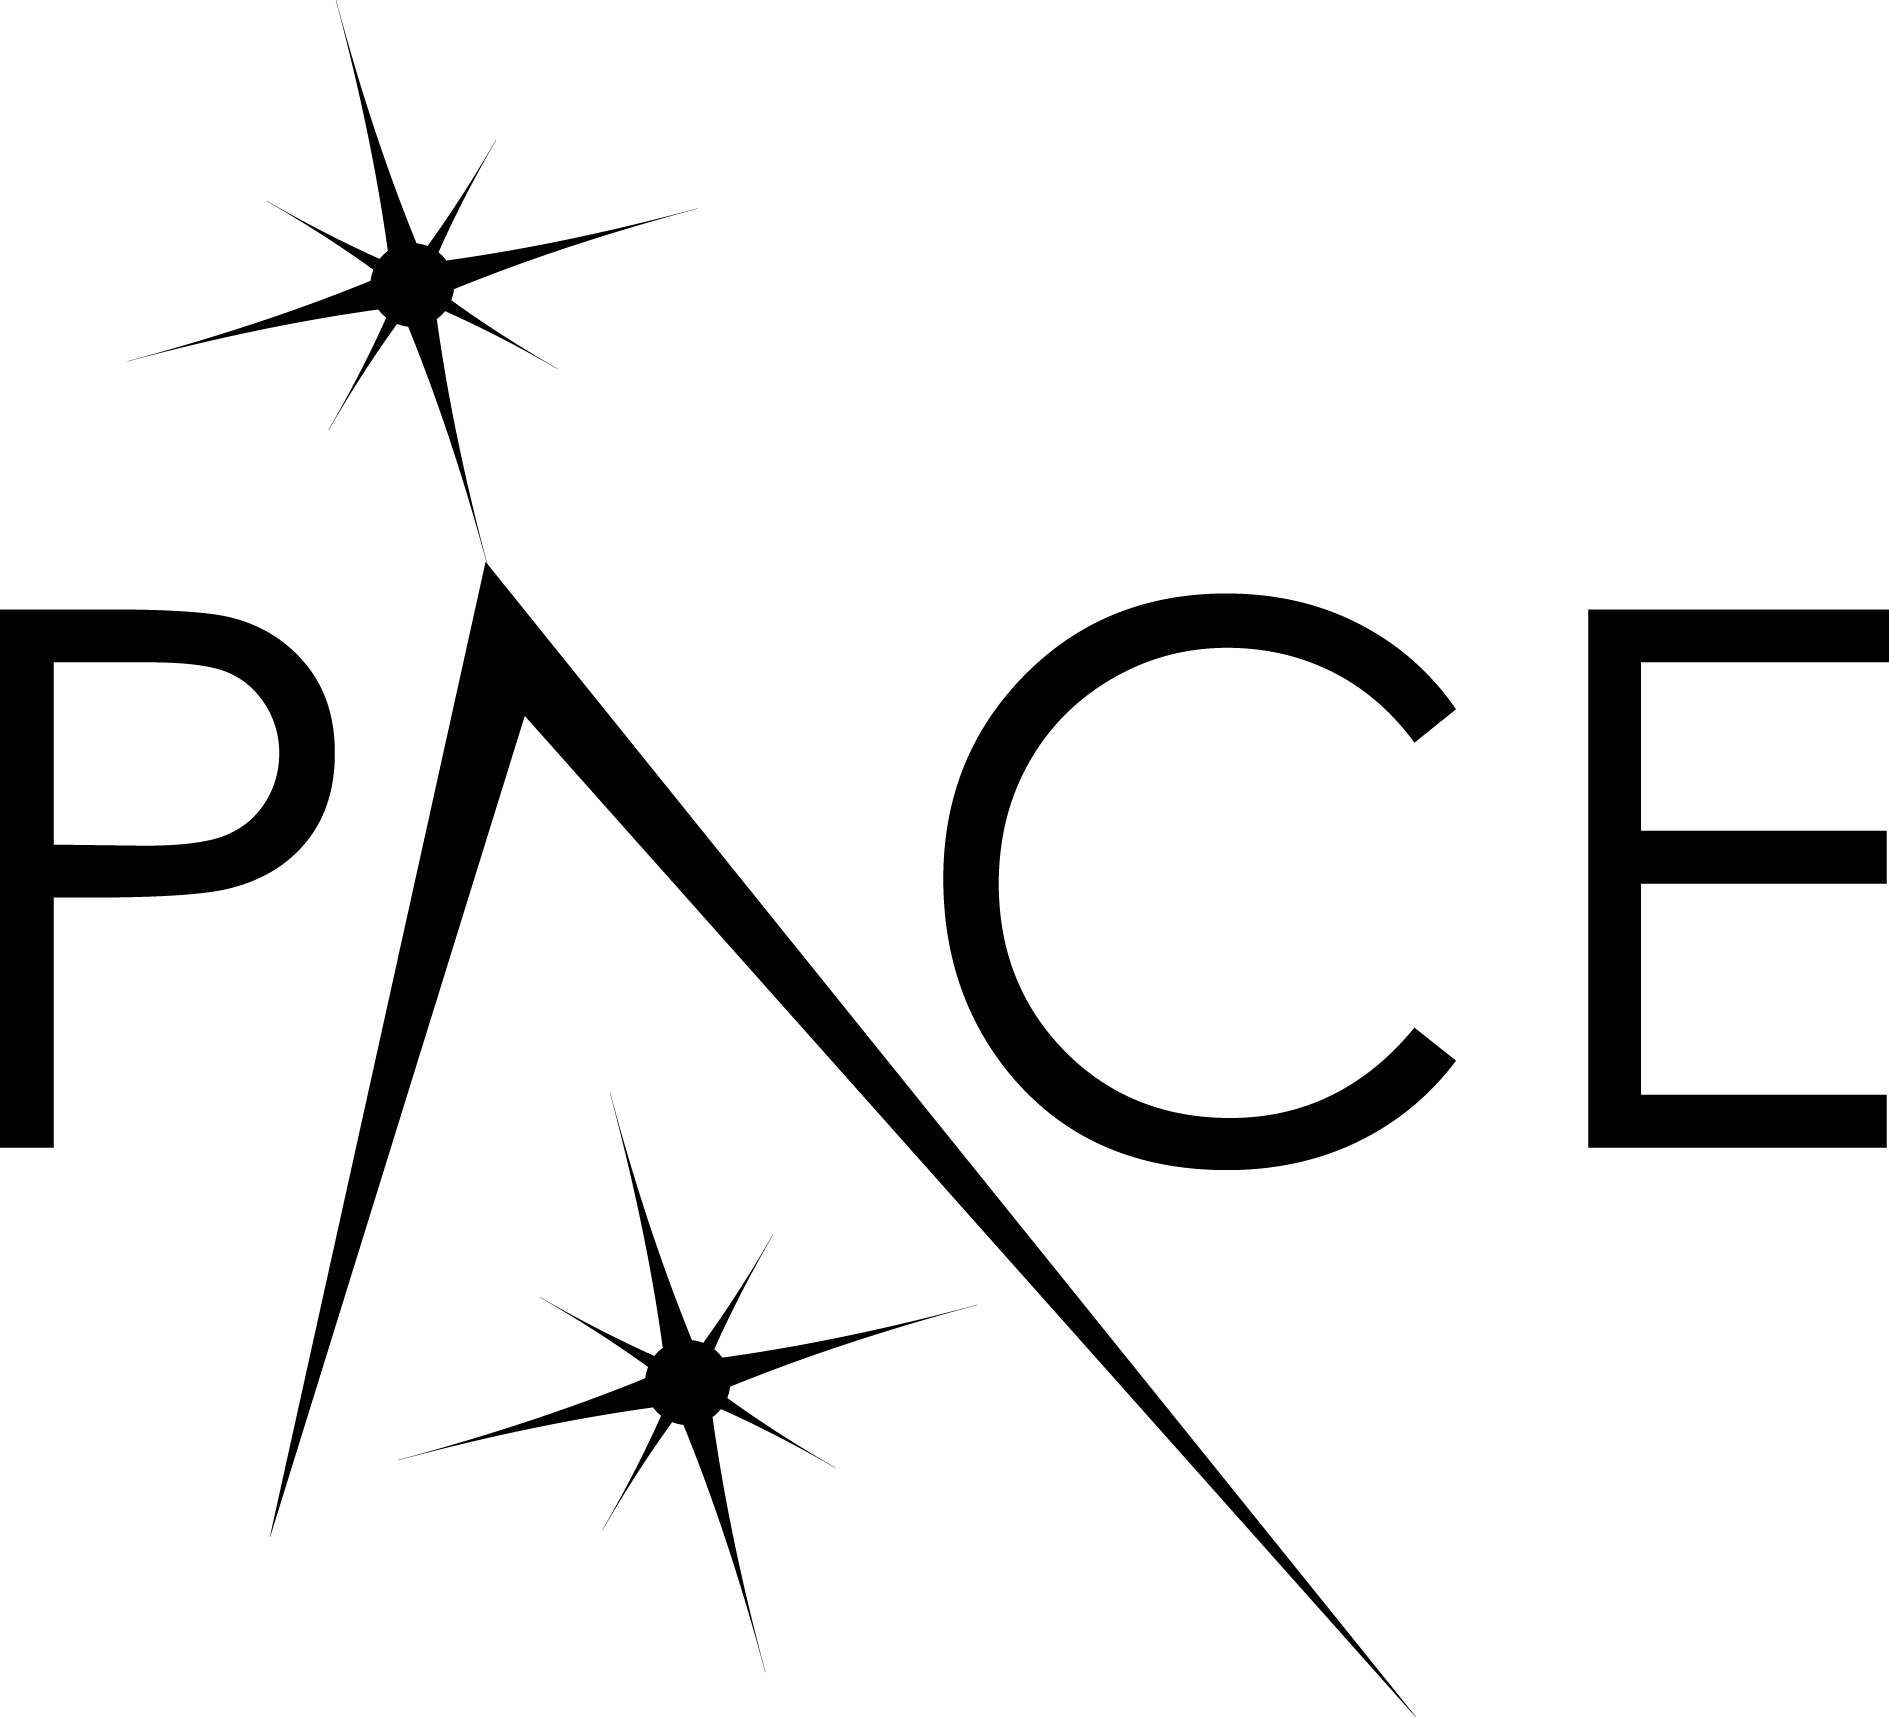 Black logo with transparent background